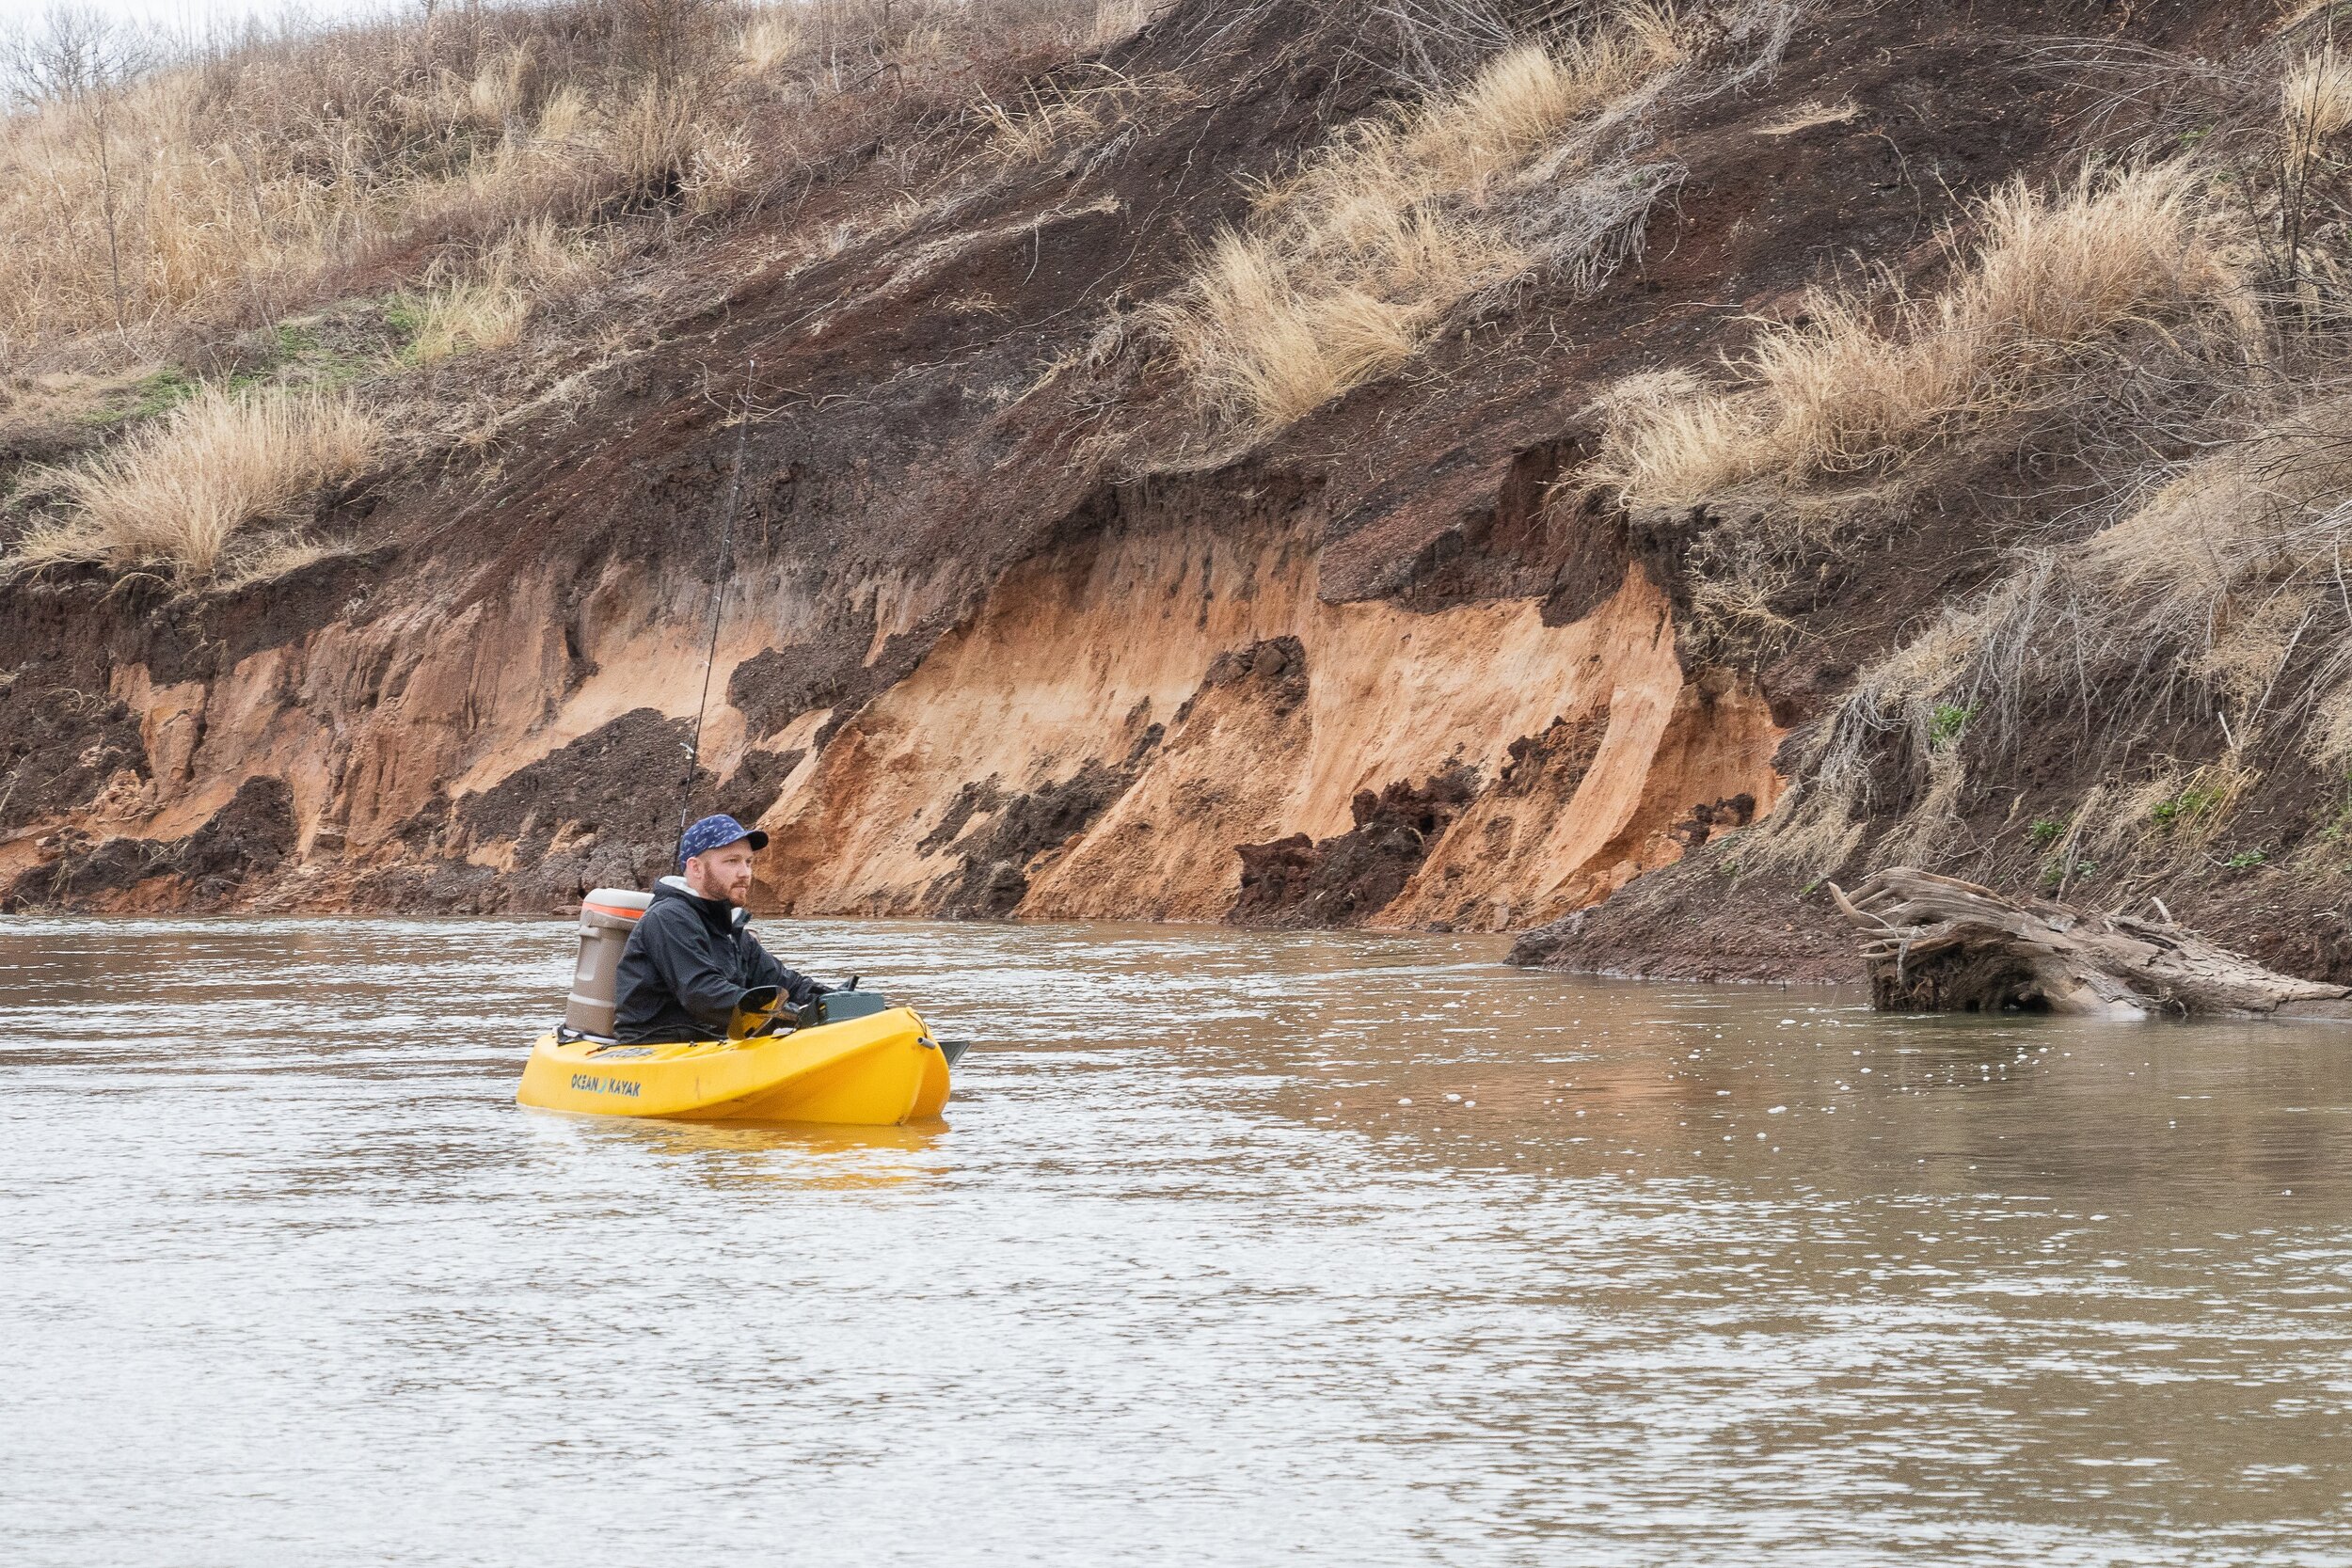  Kyle Hampton floats along, enjoying the sights and sounds of a Texas river. 